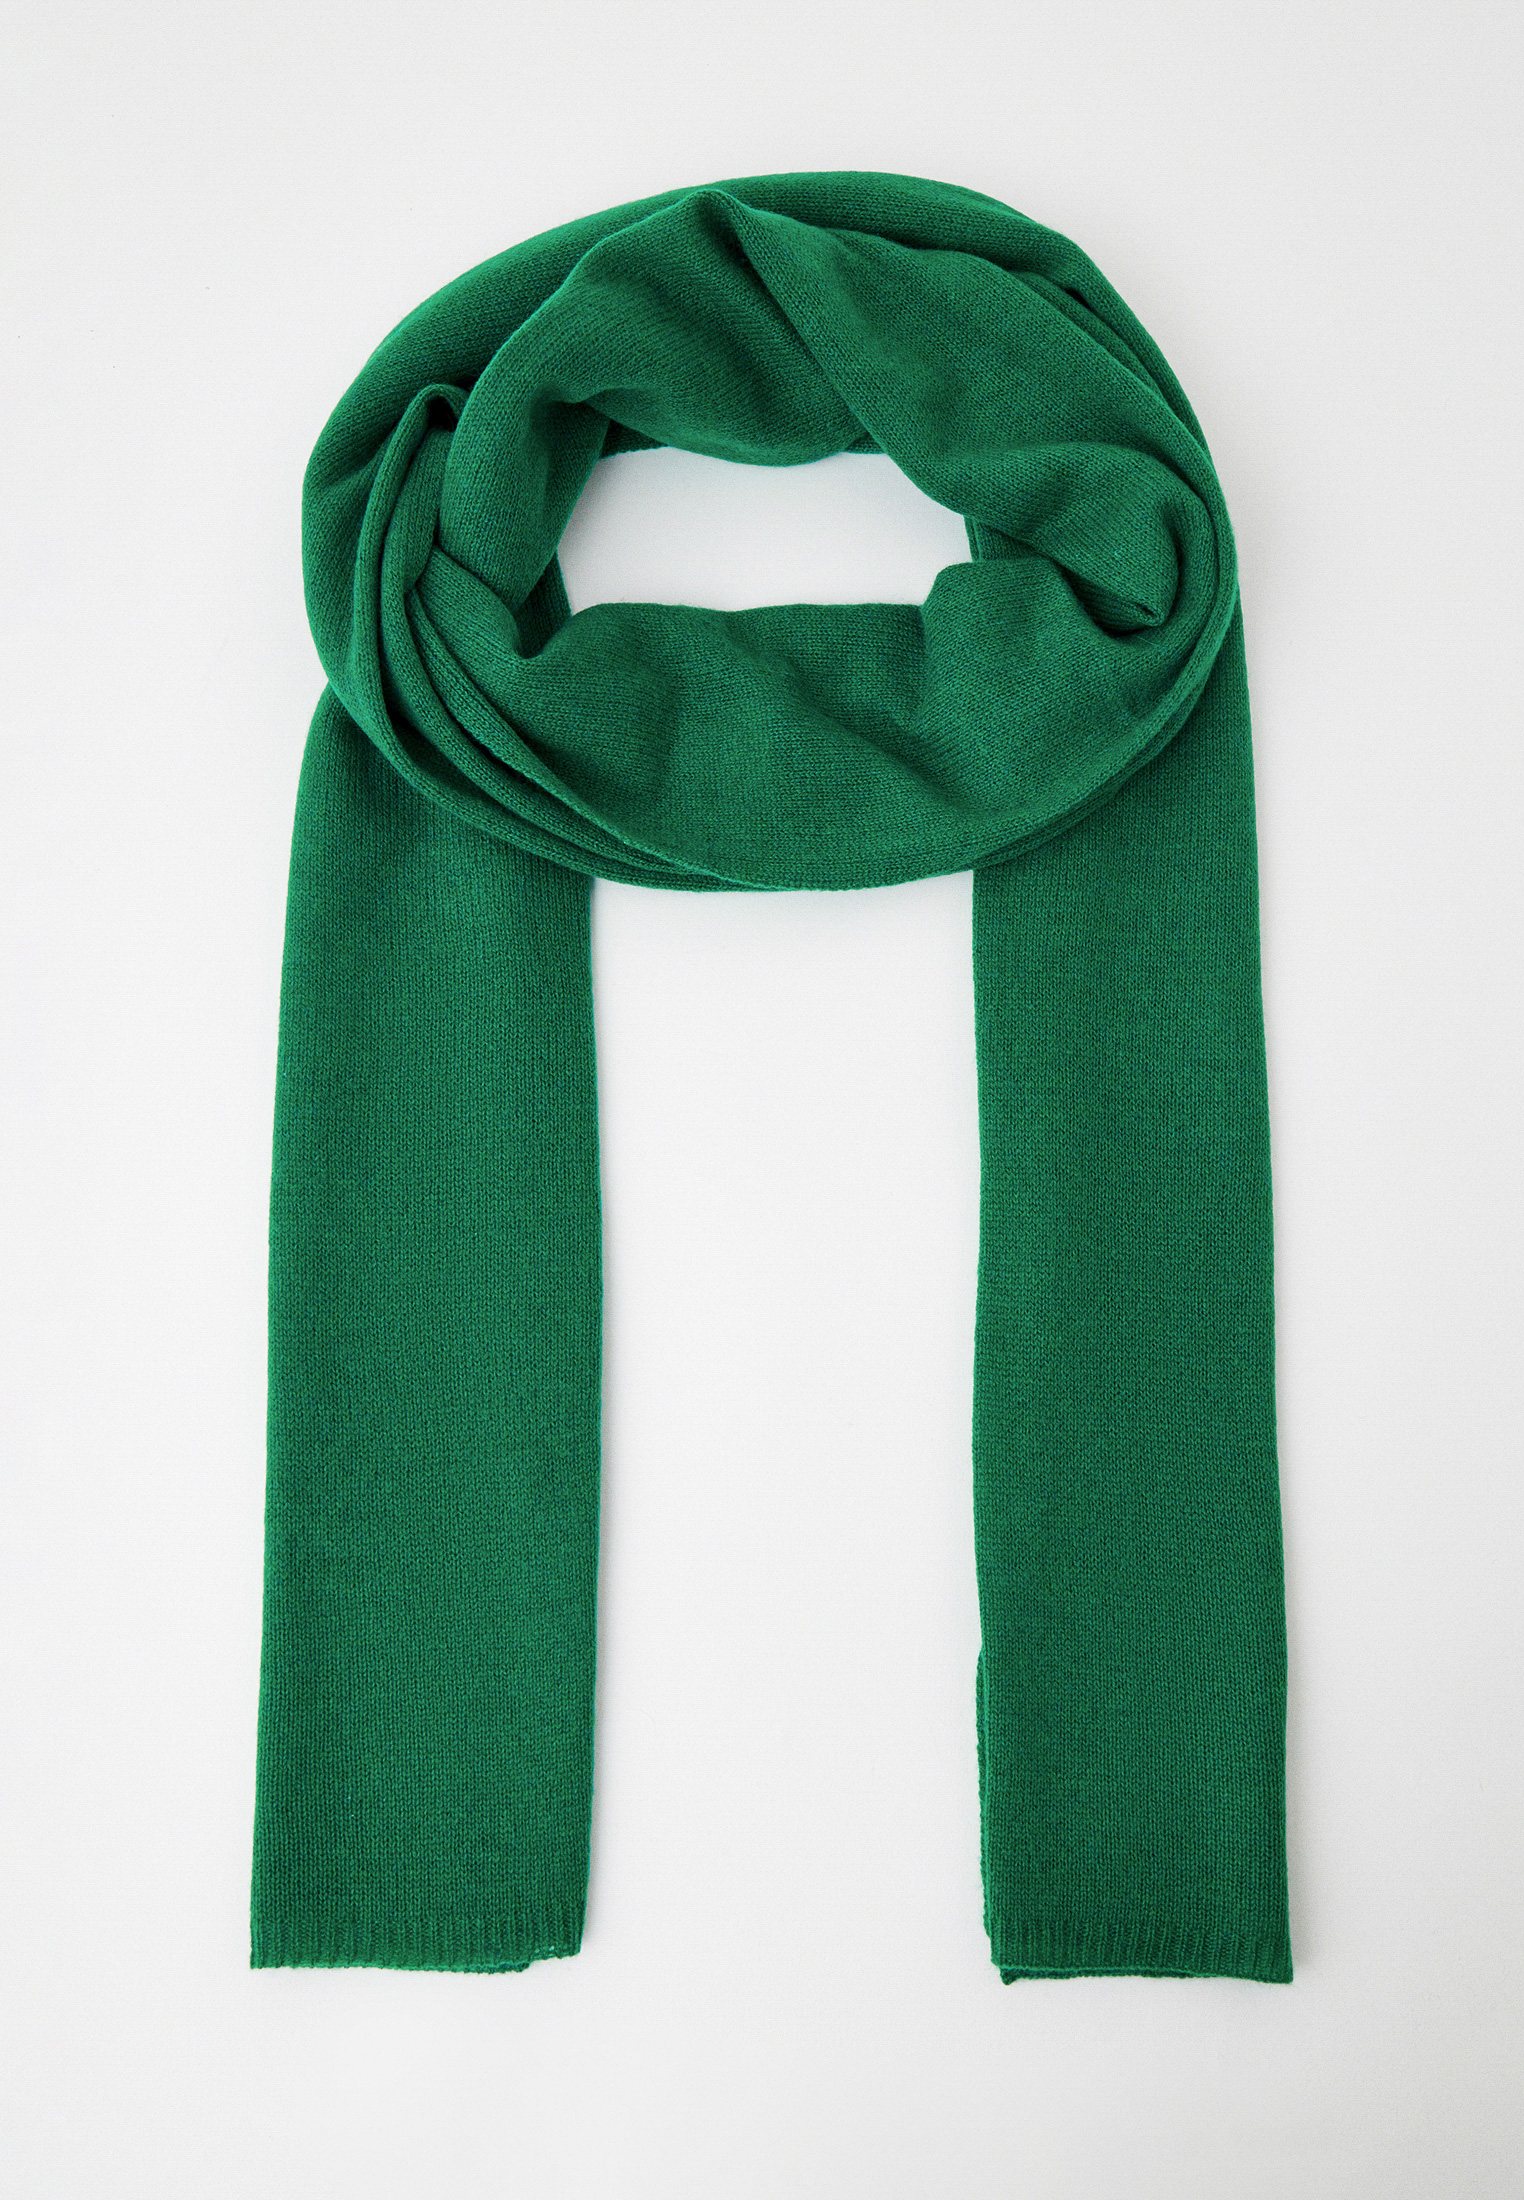 Шарф, зелёный. Шарф зелено серый. Зеленый шарфик. Зеленый шарф зима.